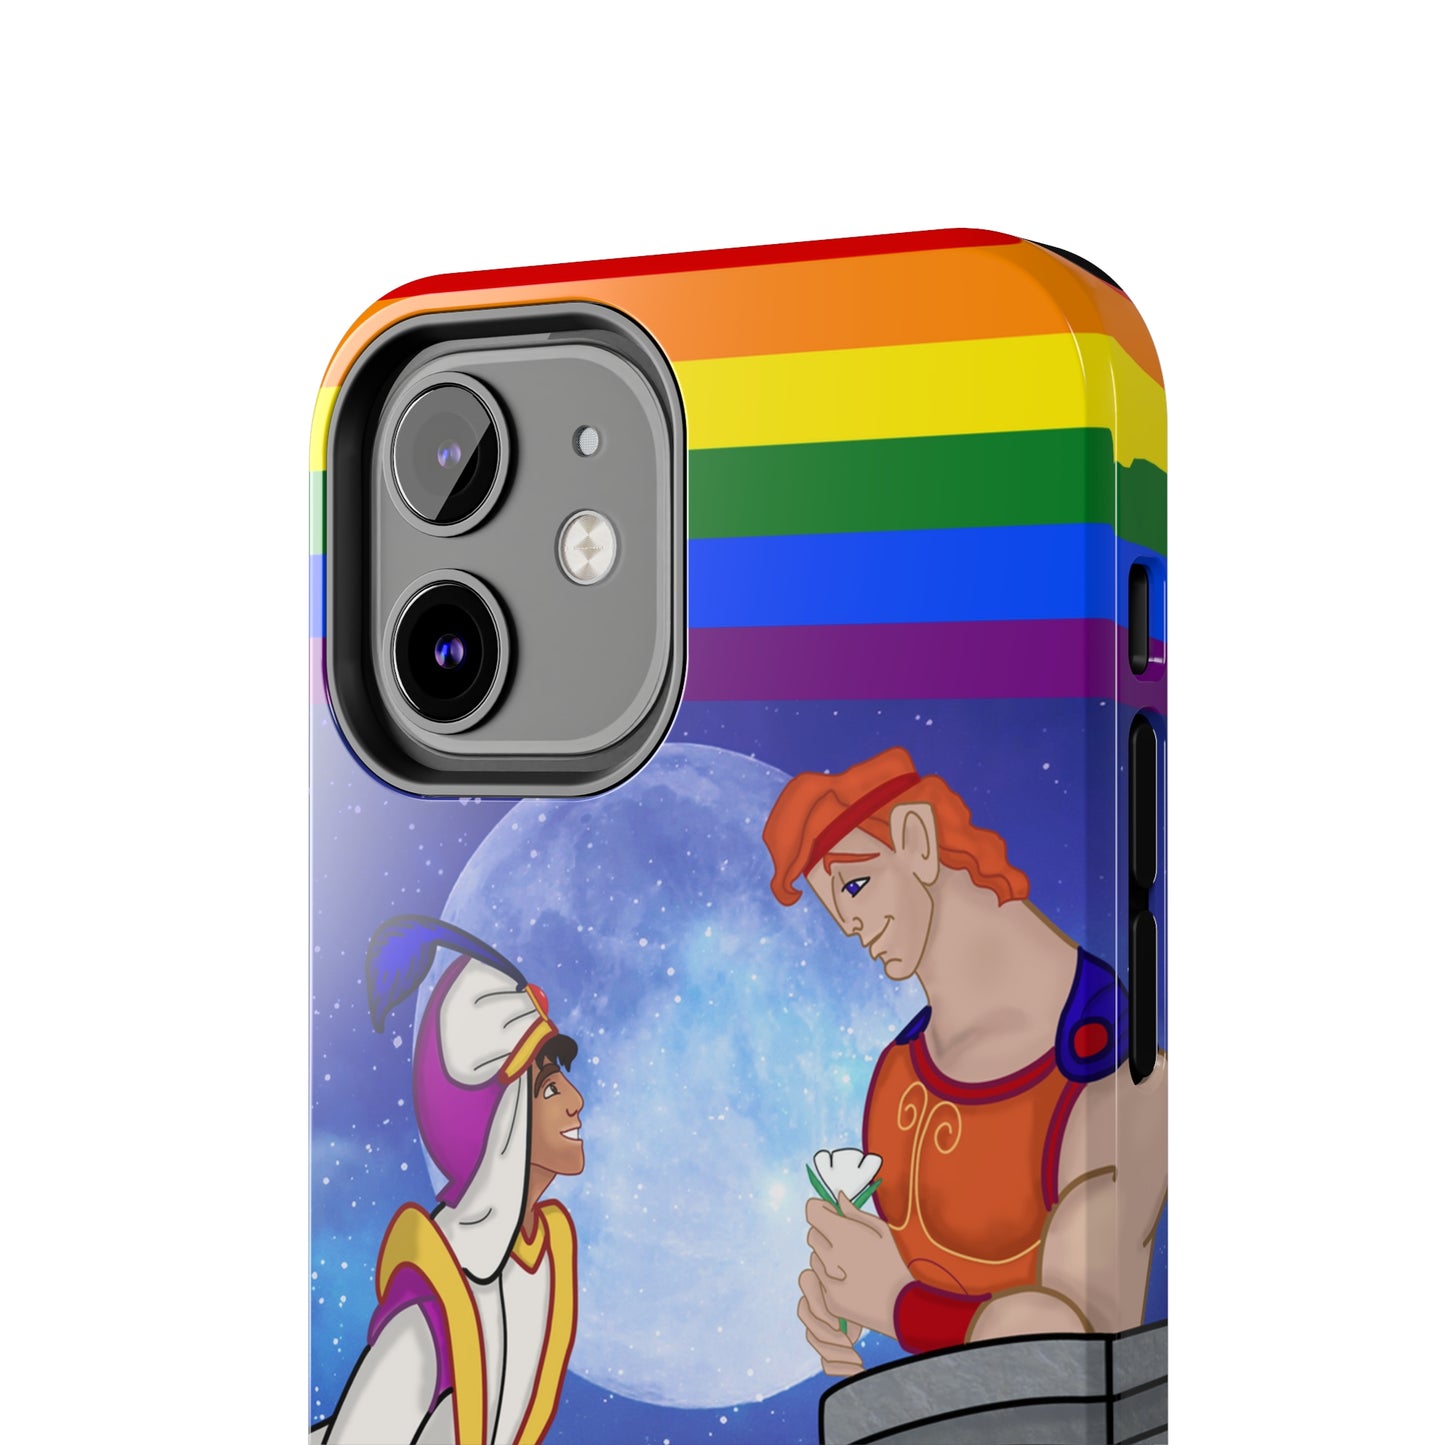 Aladdin - Hercules Rendezvous Coques iPhone résistantes